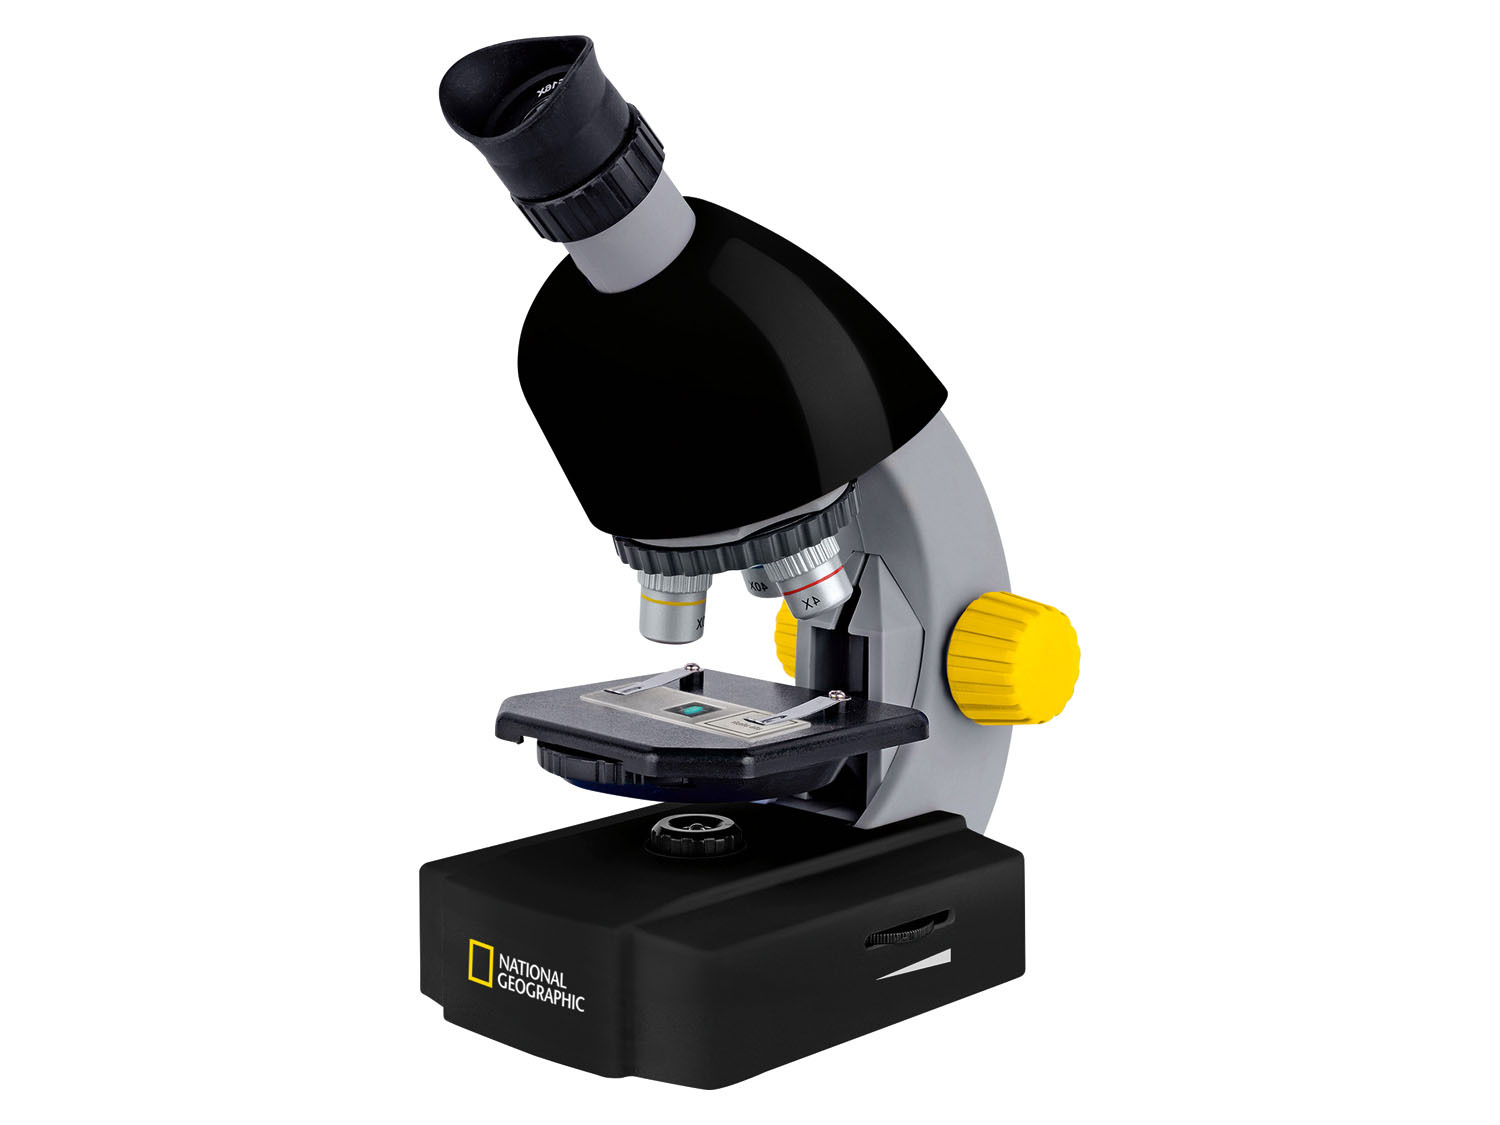 National Geographic Teleskop und Mikroskop | LIDL Set